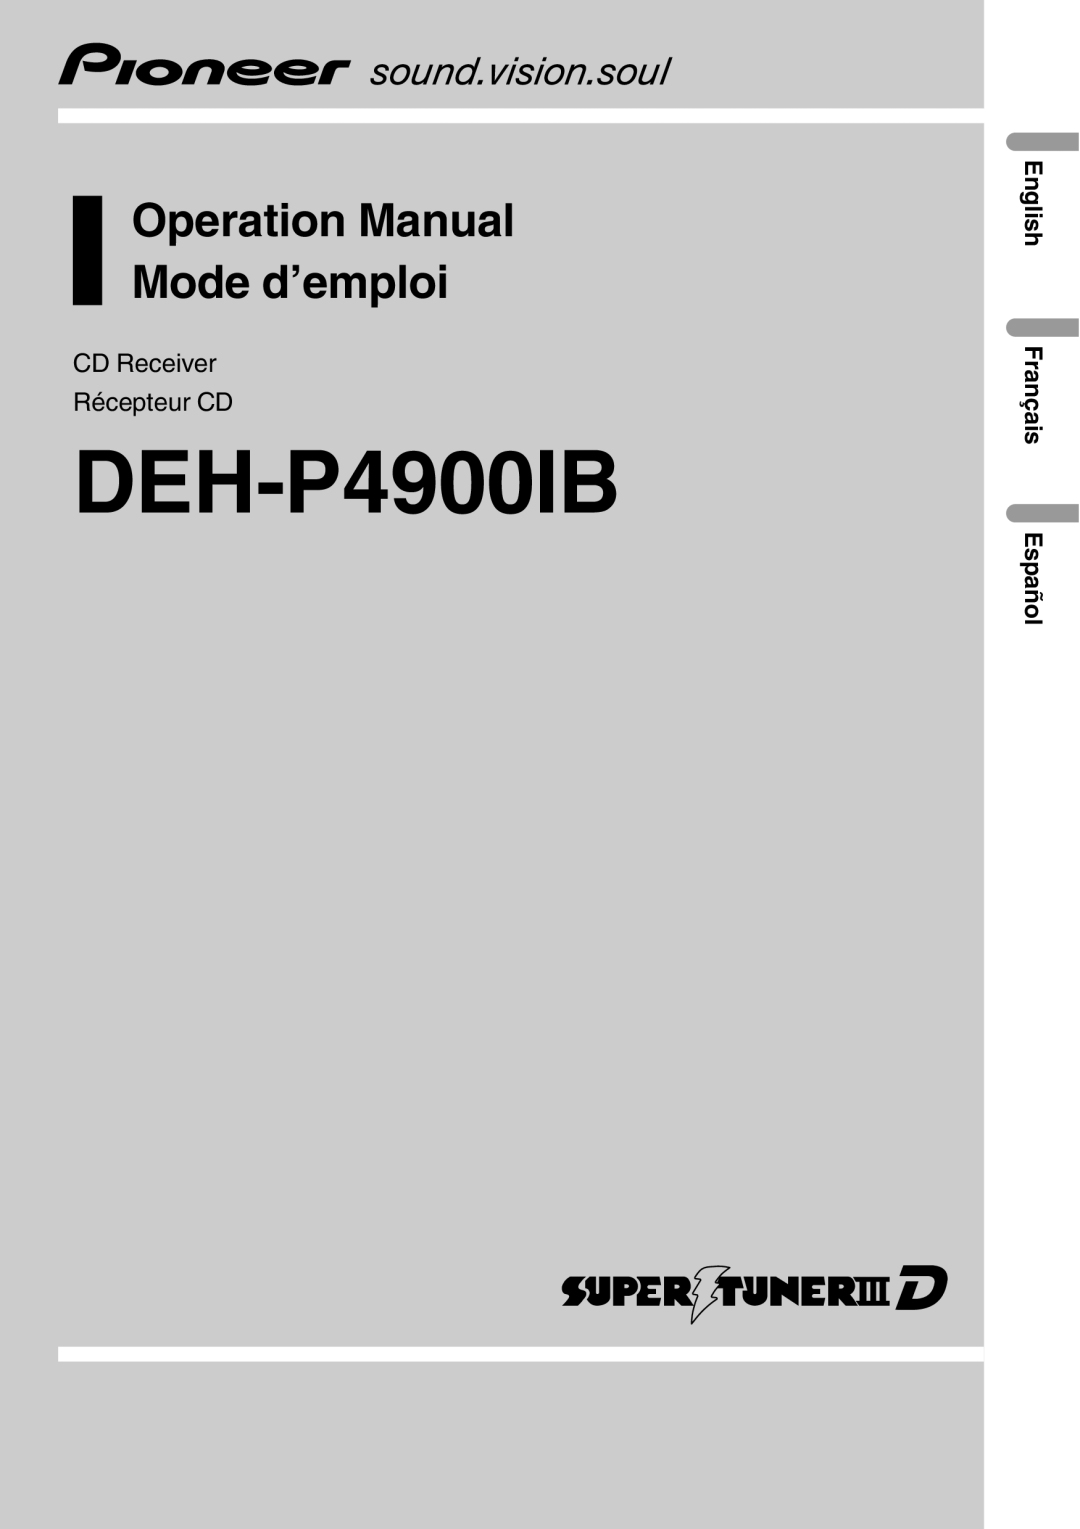 Pioneer SRC7127-B/N operation manual CD Receiver Récepteur CD, English Français Español, DEH-P4900IB 